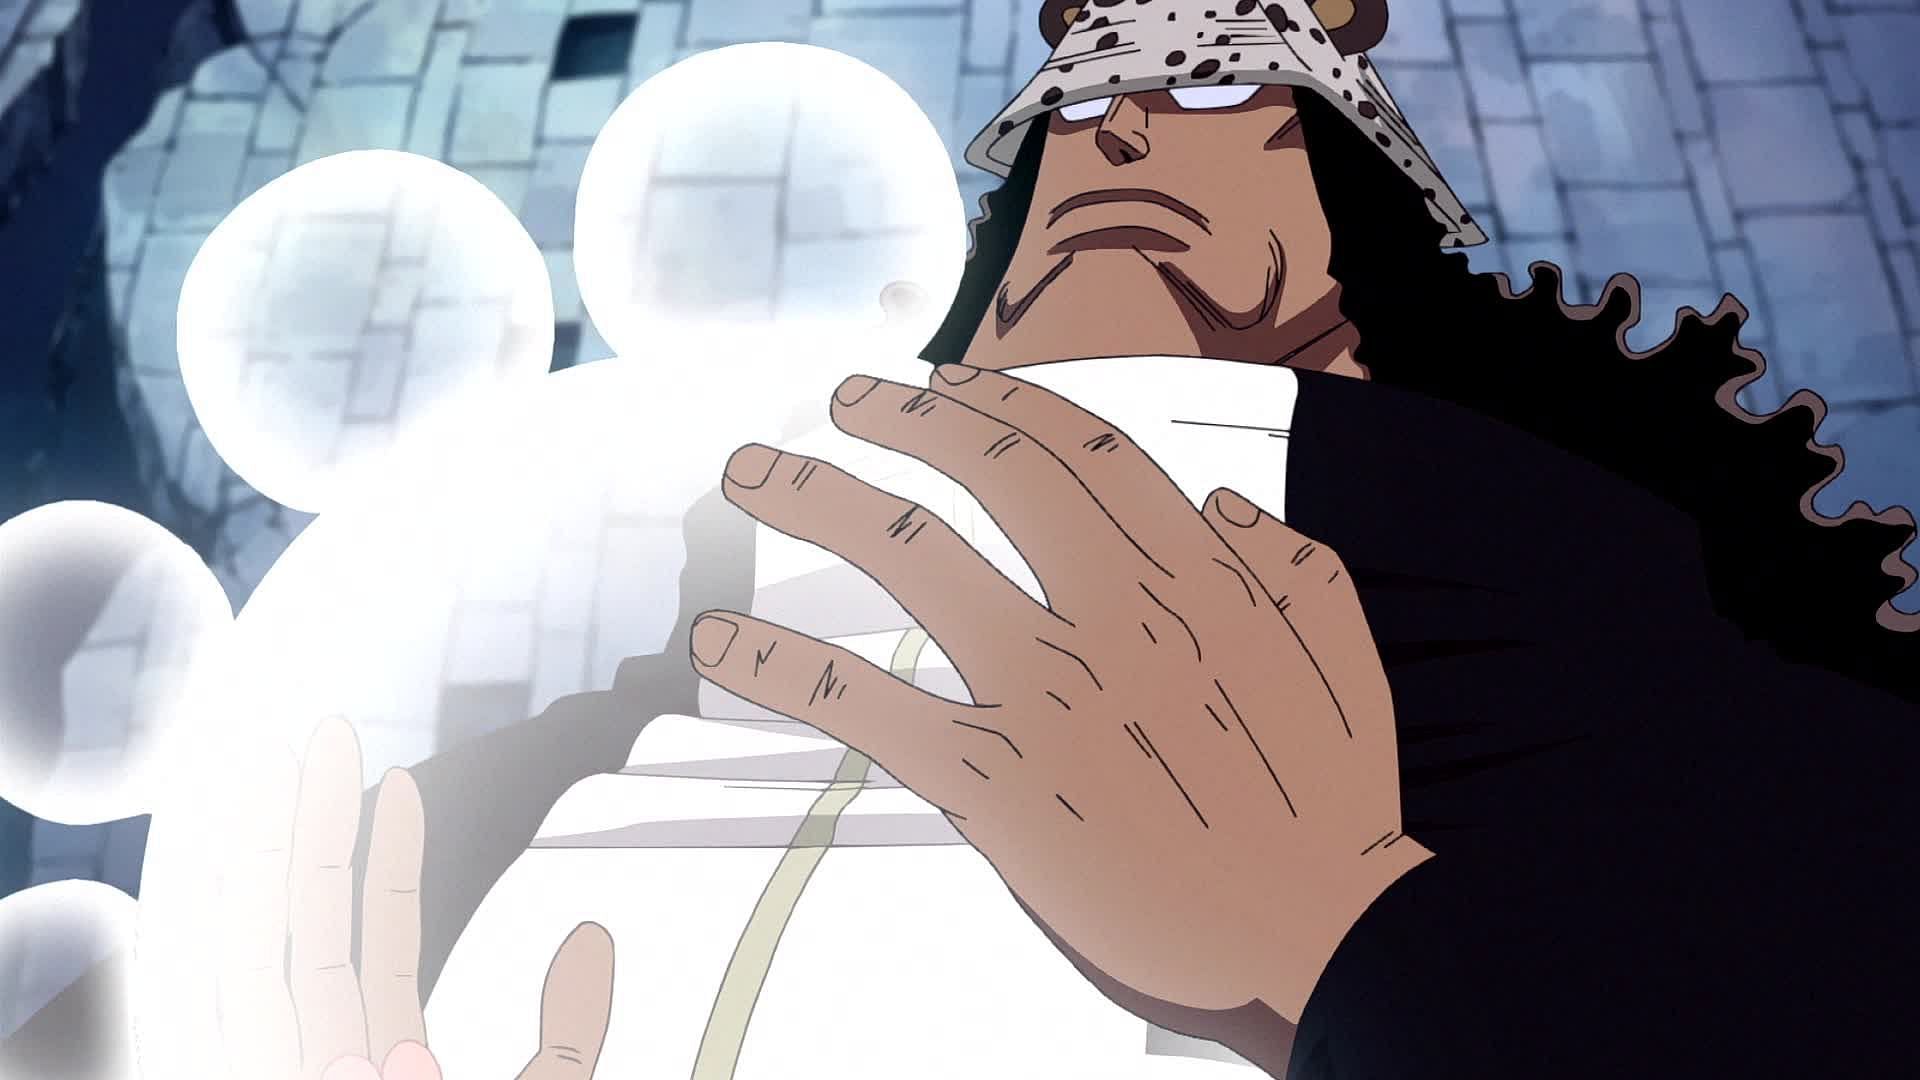 One Piece chapter 1096: Kuma achieves his dream as Rocks vs Roger teased (Image via Toei Animation)